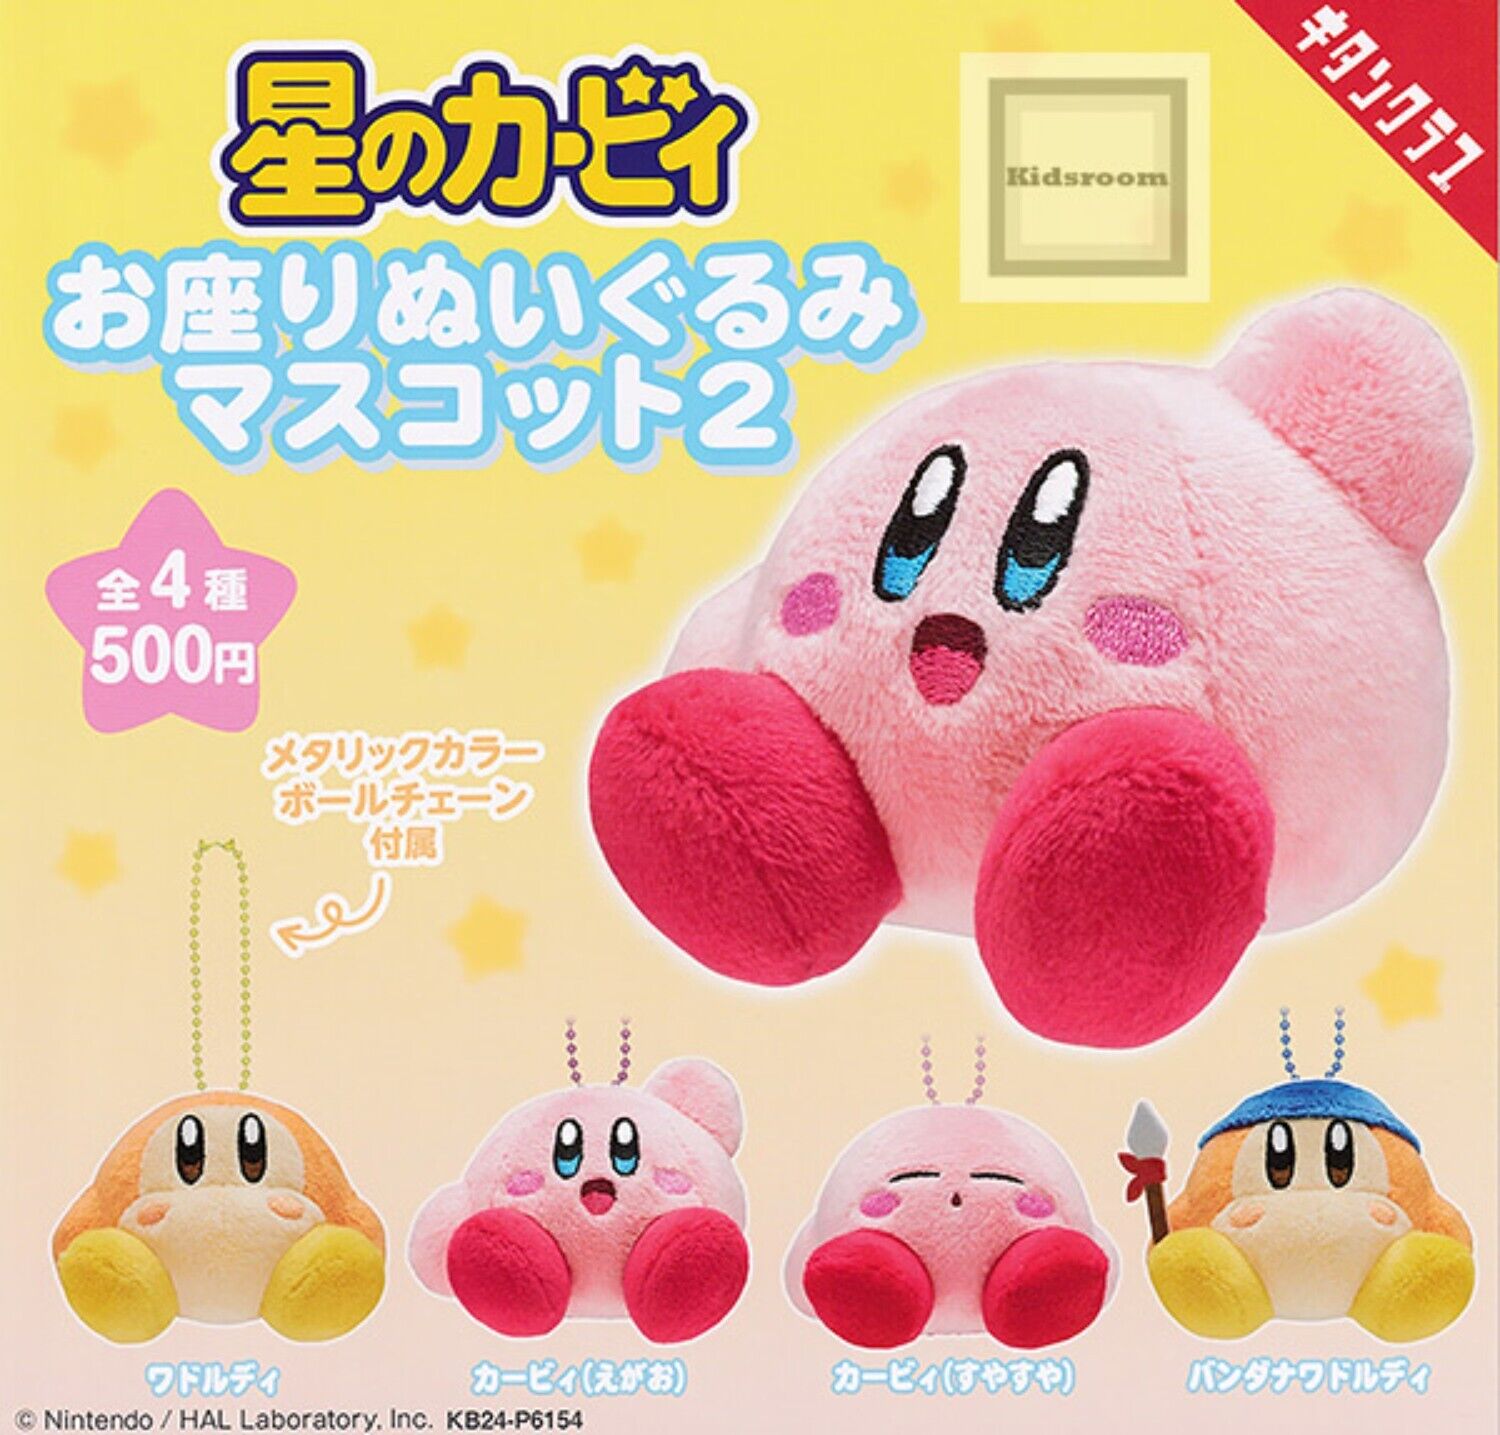 Kirby Sitting Stuffed Toy Mascot 2 Capsule Toy 4 Types Full Comp Set Gacha New